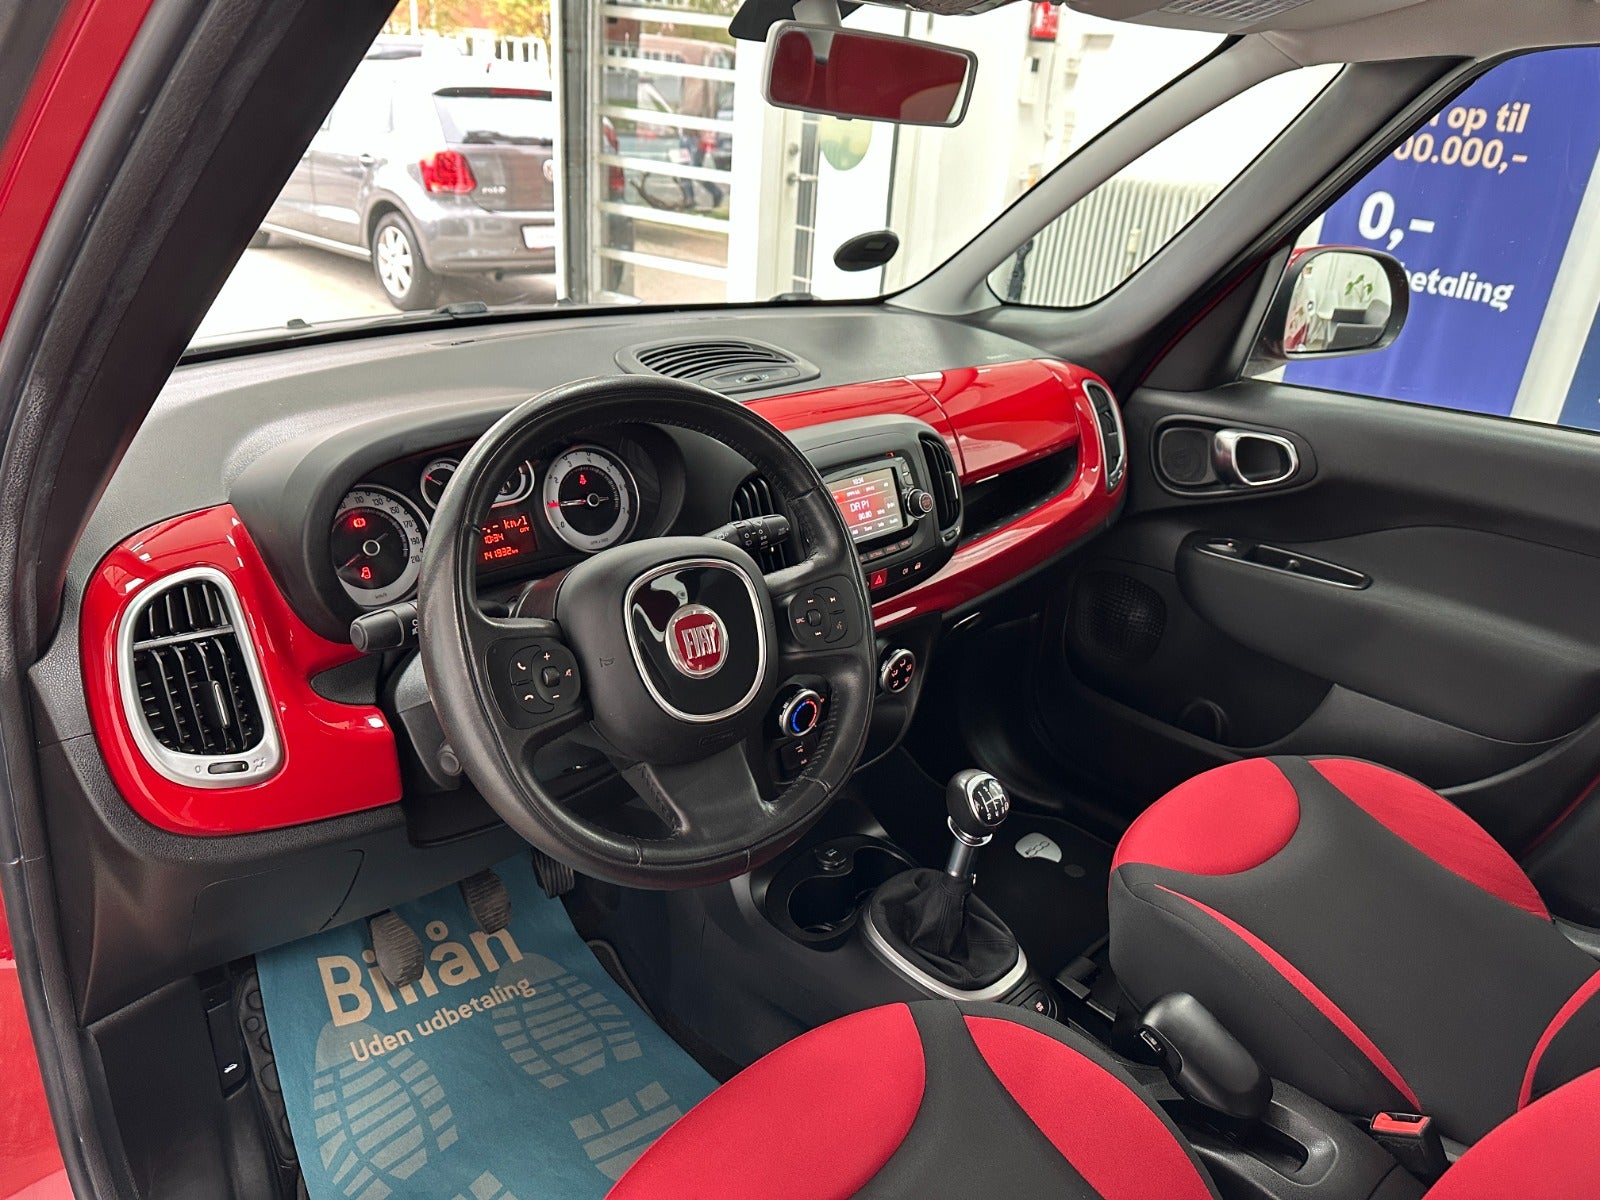 Fiat 500L 1,4 16V 95 Popstar Benzin modelår 2013 km 142000